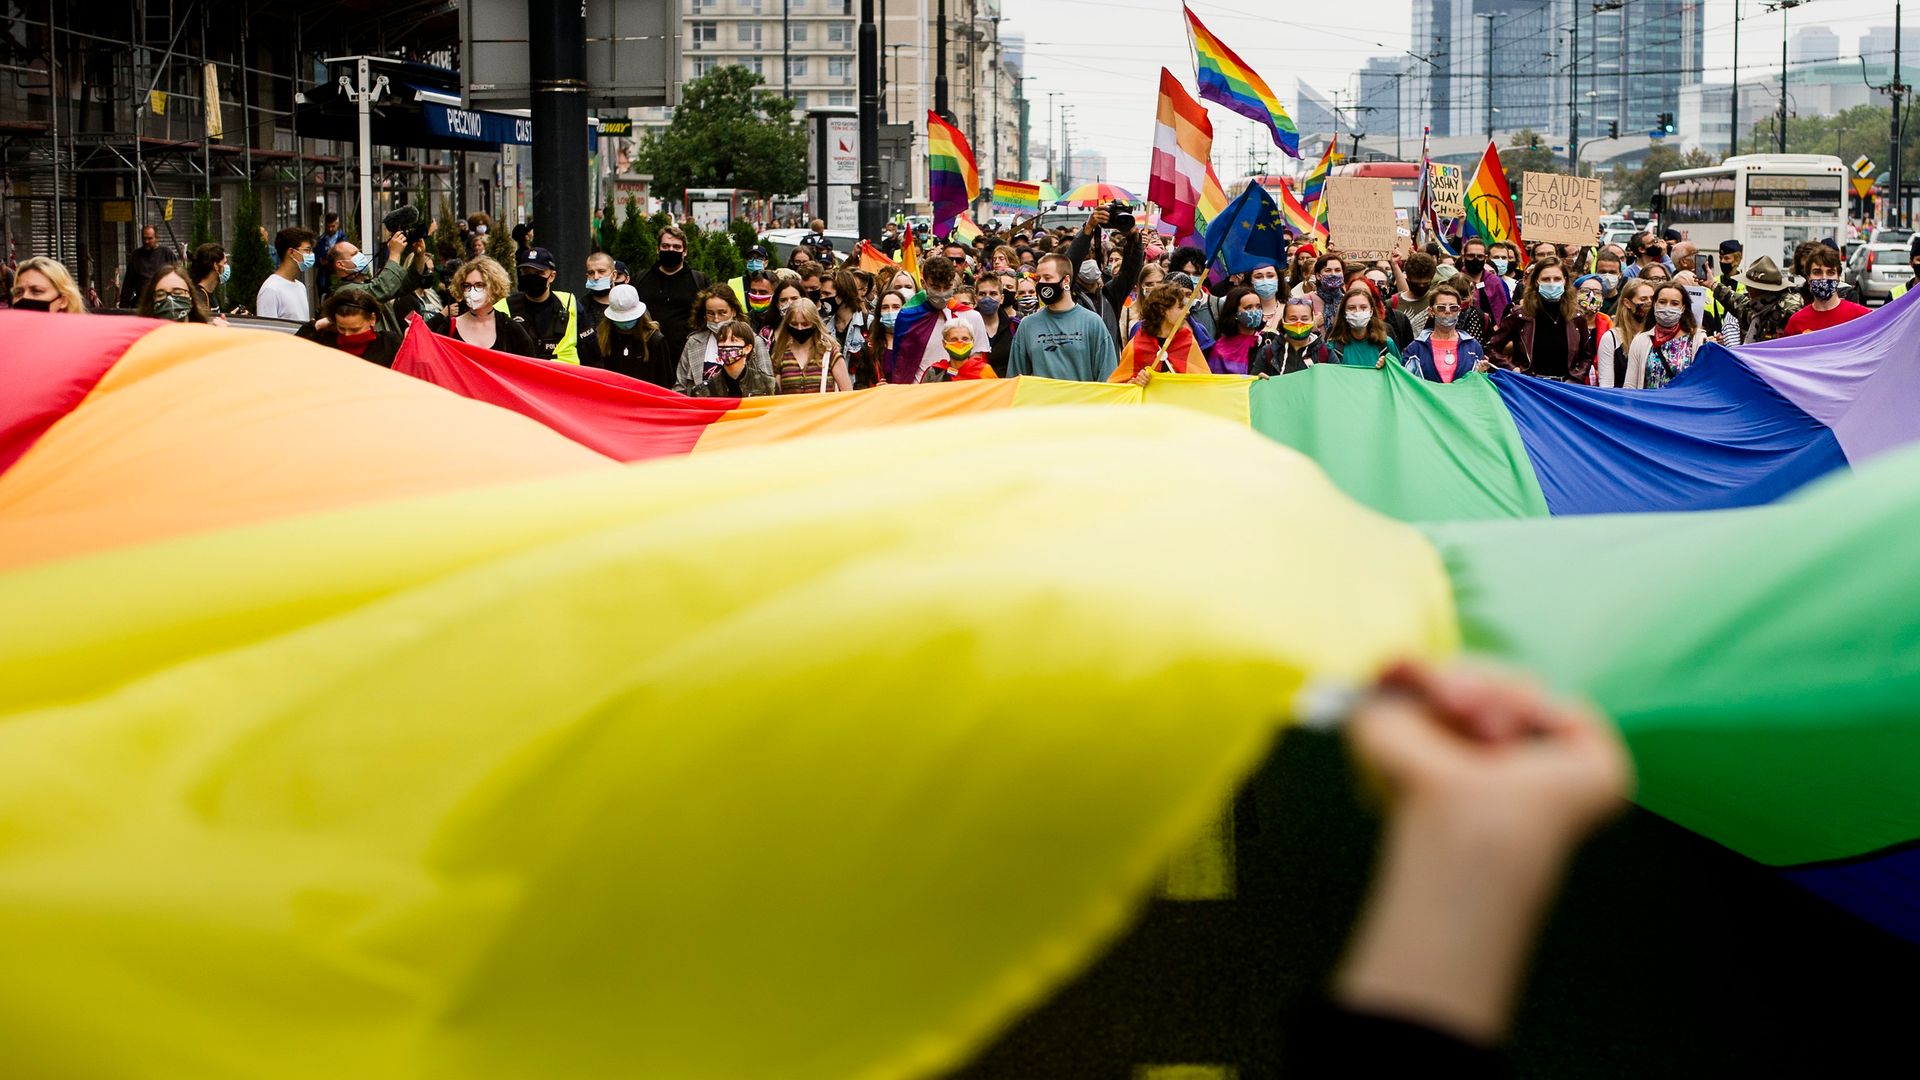 Anti-discrimination march of LGBTQ+ supporters in Warsaw. - Credit: Piotr Lapinski/NurPhoto via Getty Images